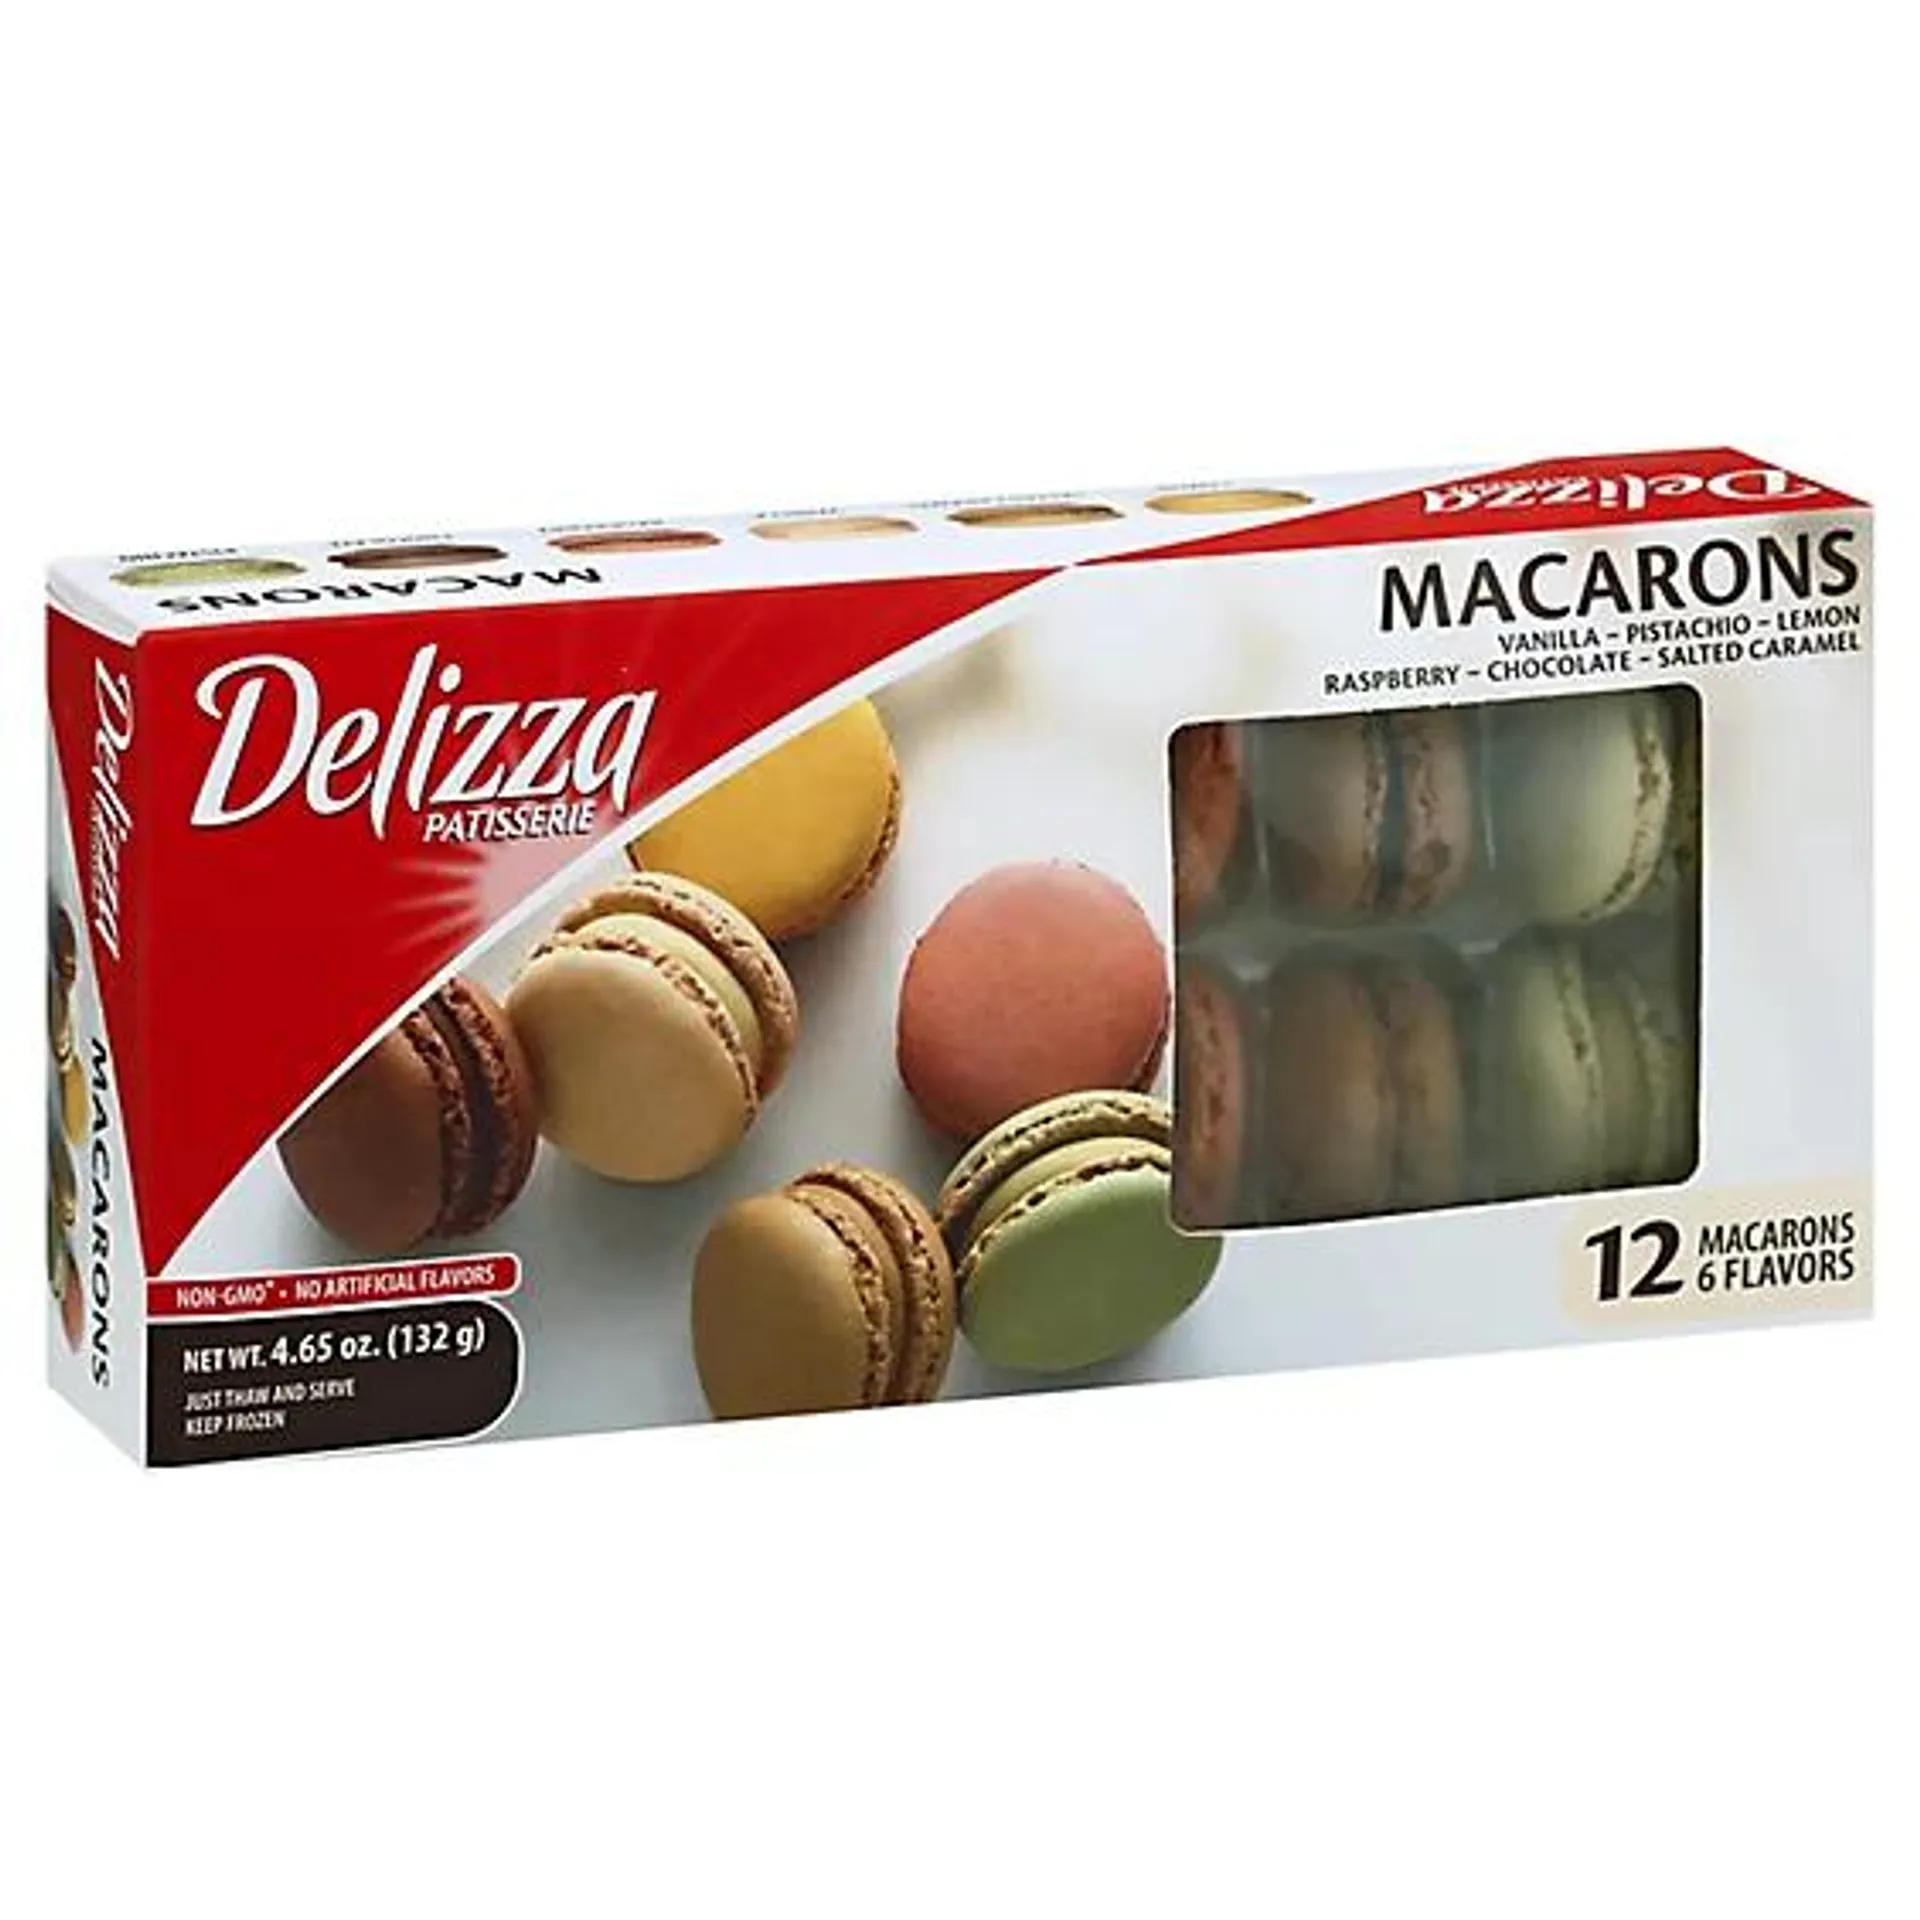 Delizza Macarons Assortment 12 Count - 4.65 Oz